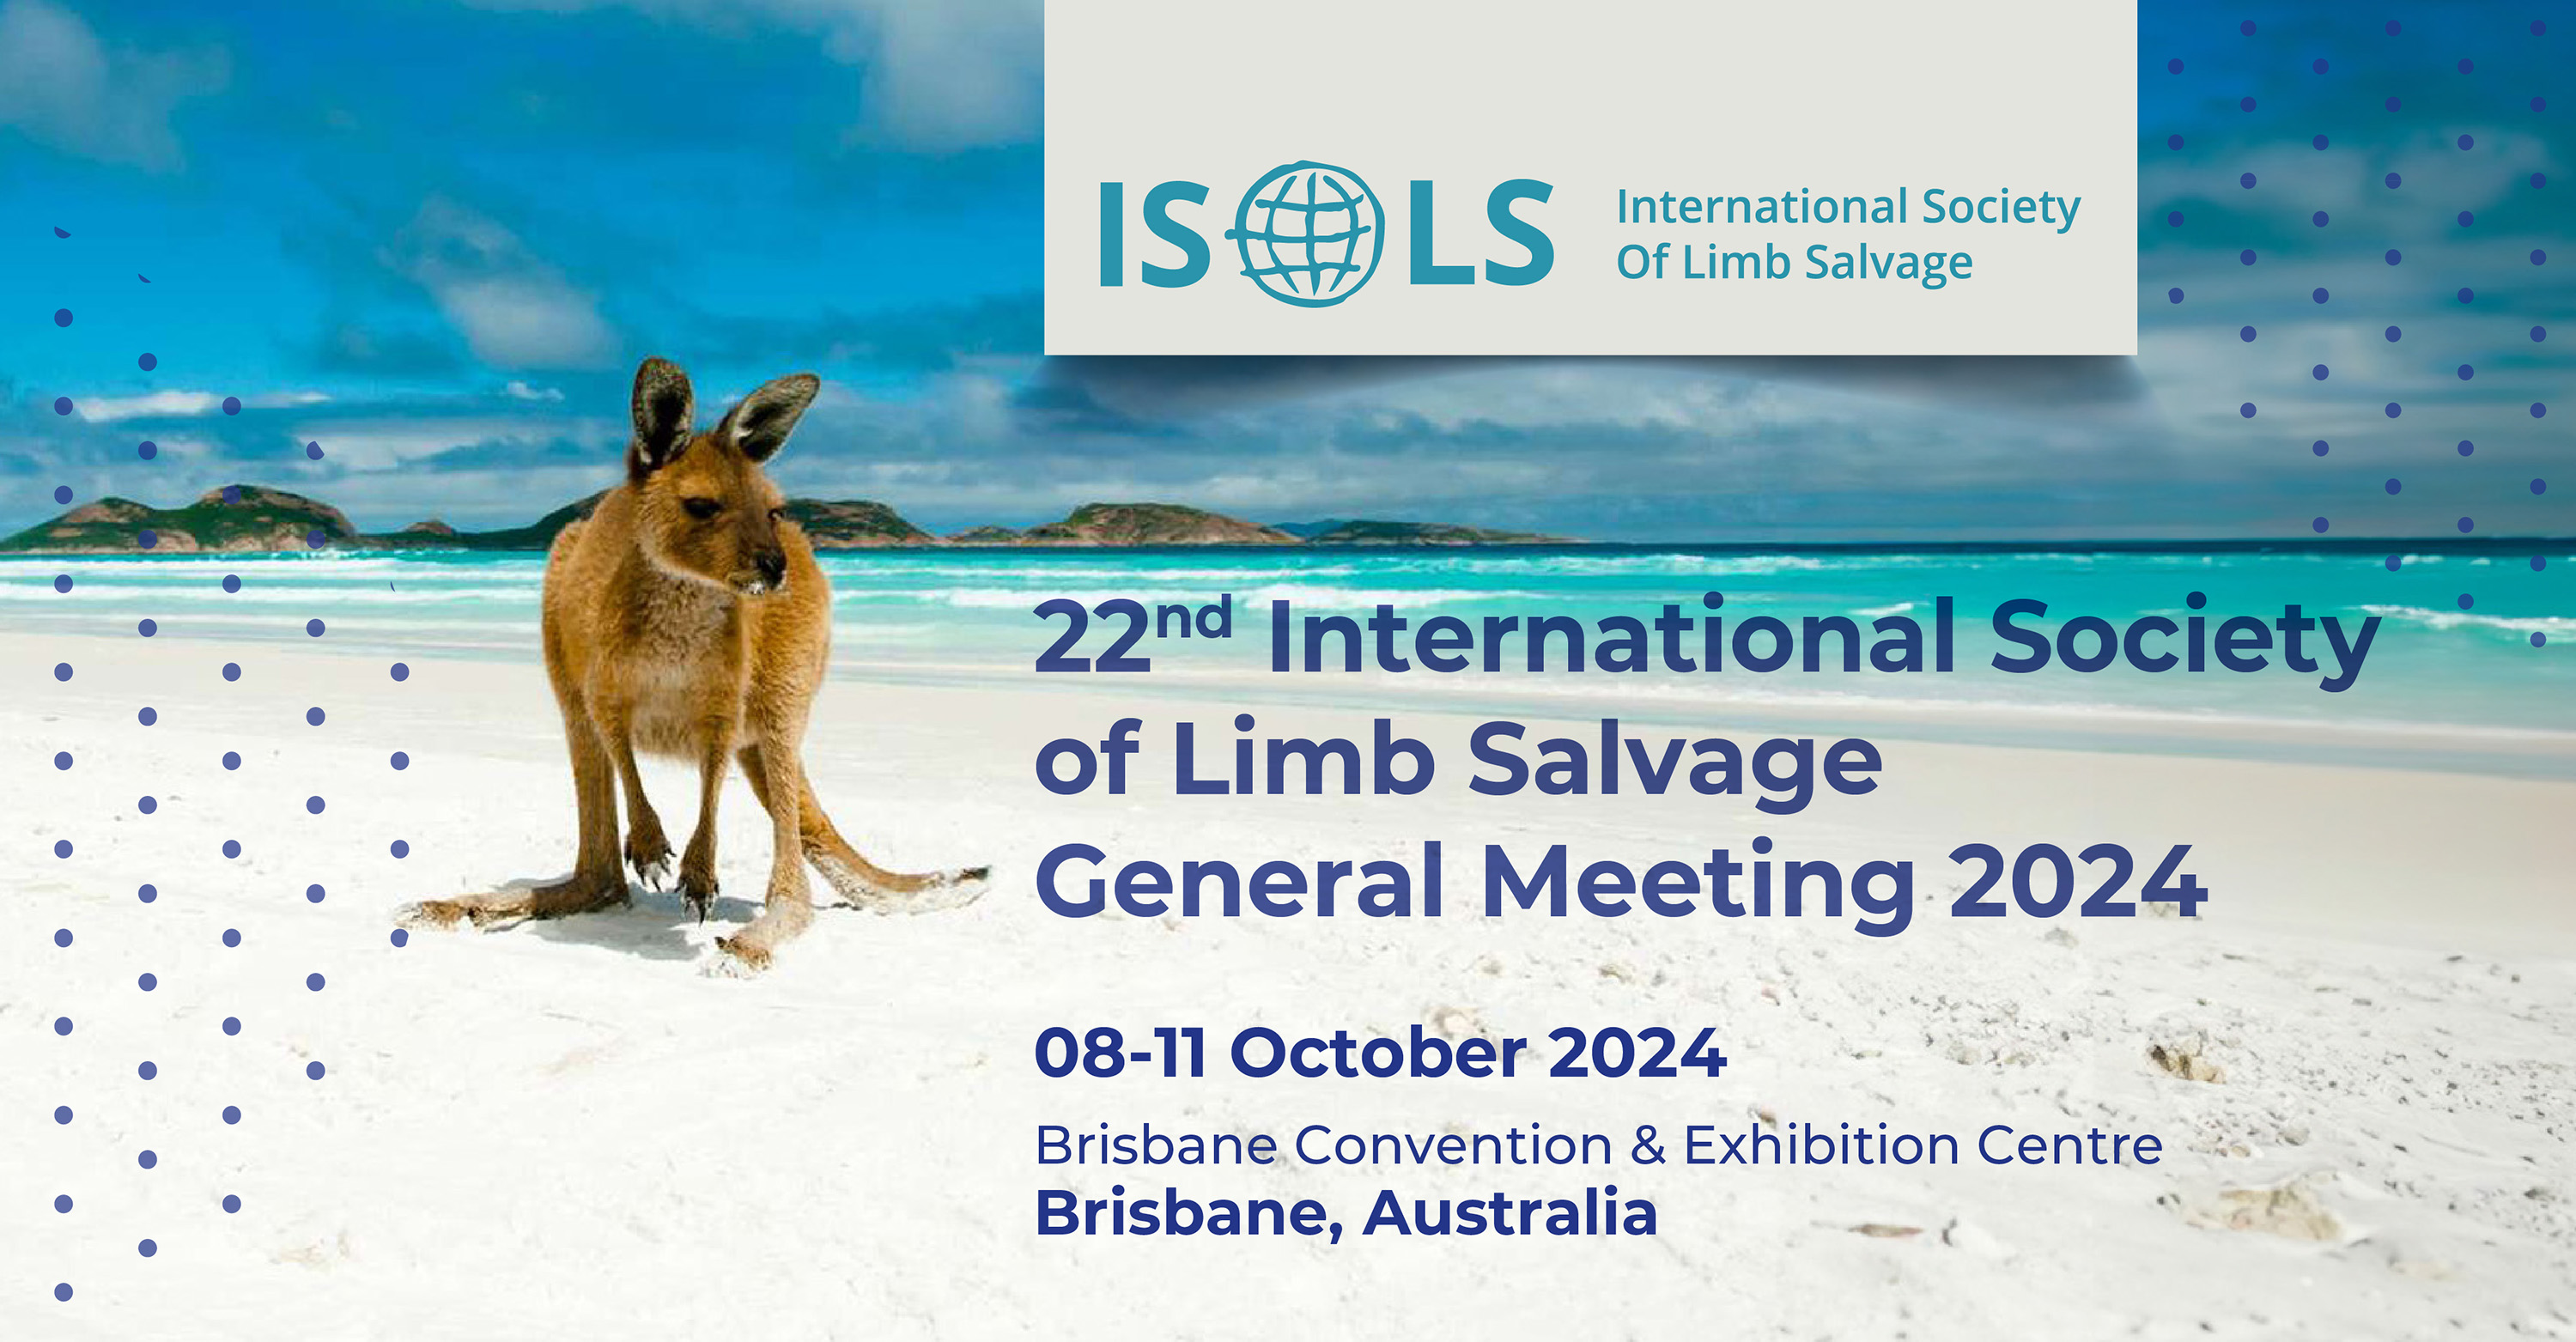 22nd International Society of Limb Salvage General Meeting 2024